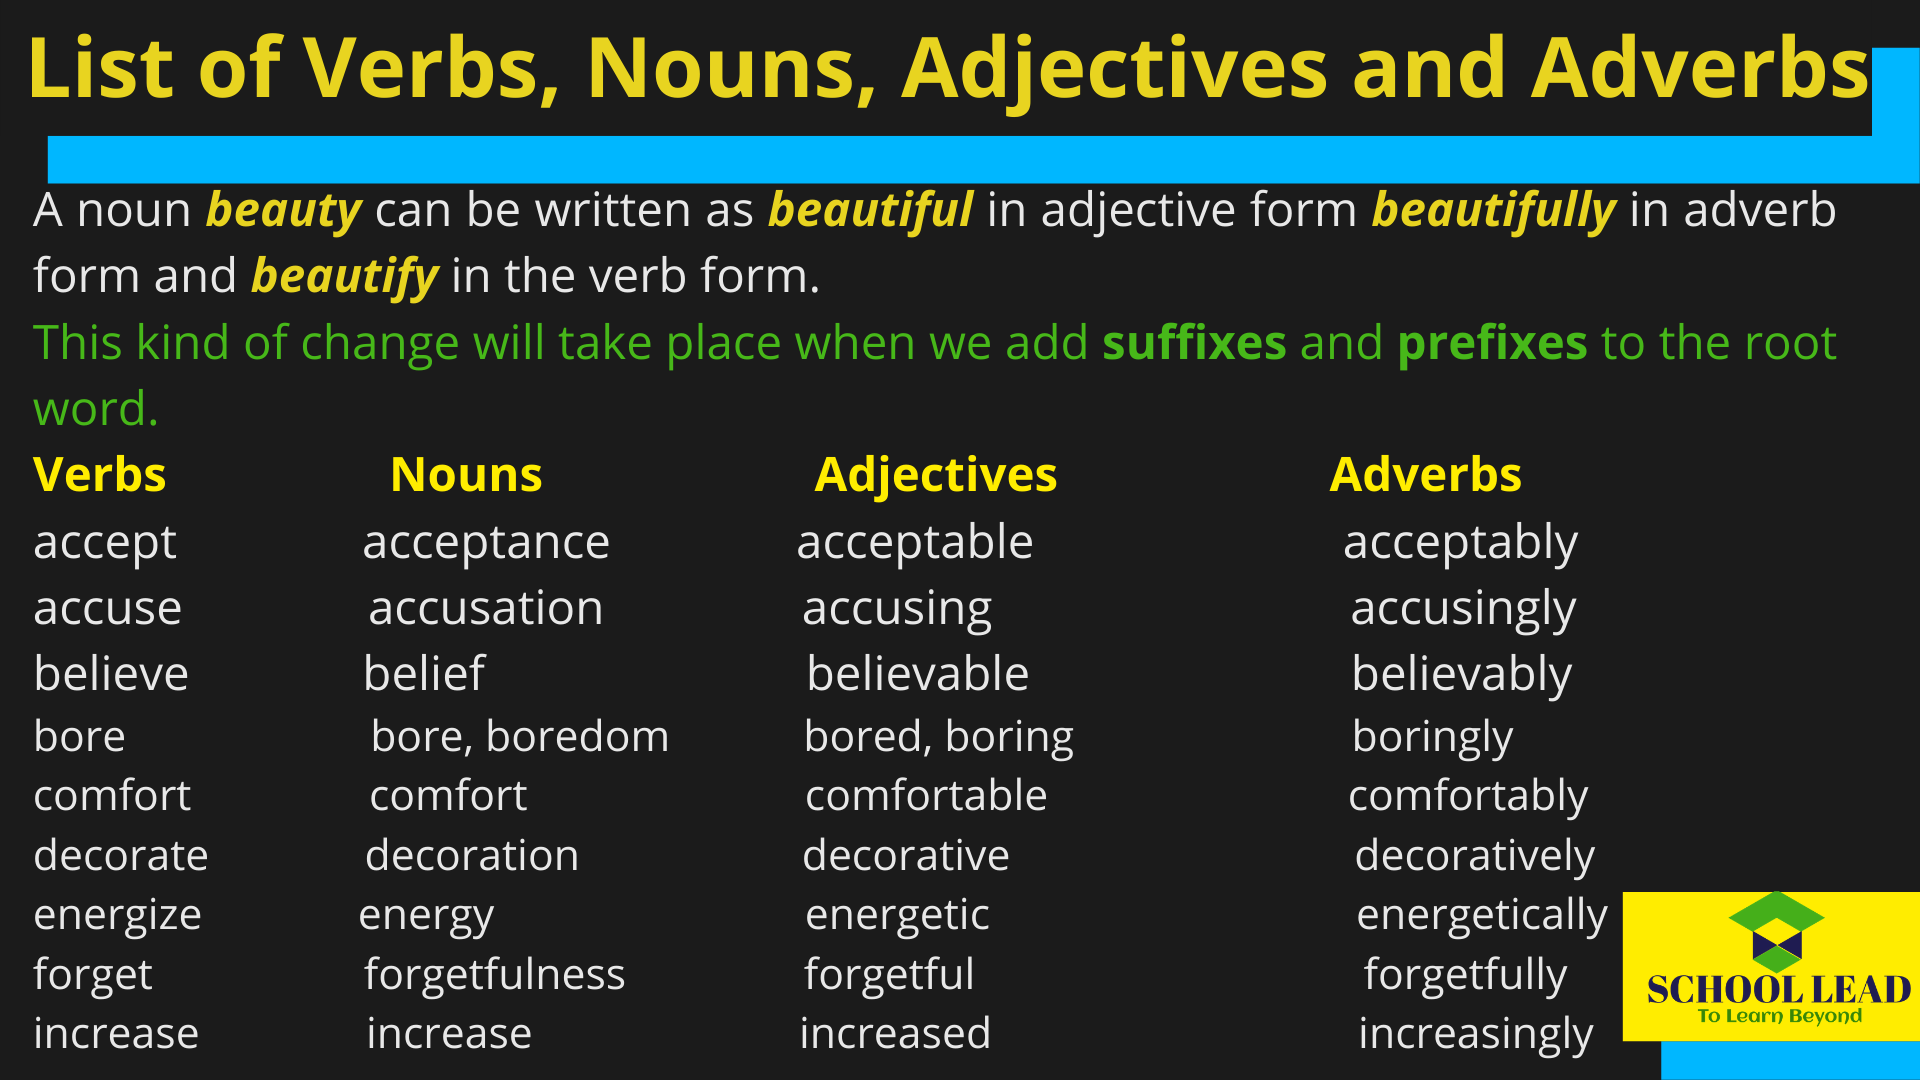 Verbs, Nouns, Adjectives and Adverbs